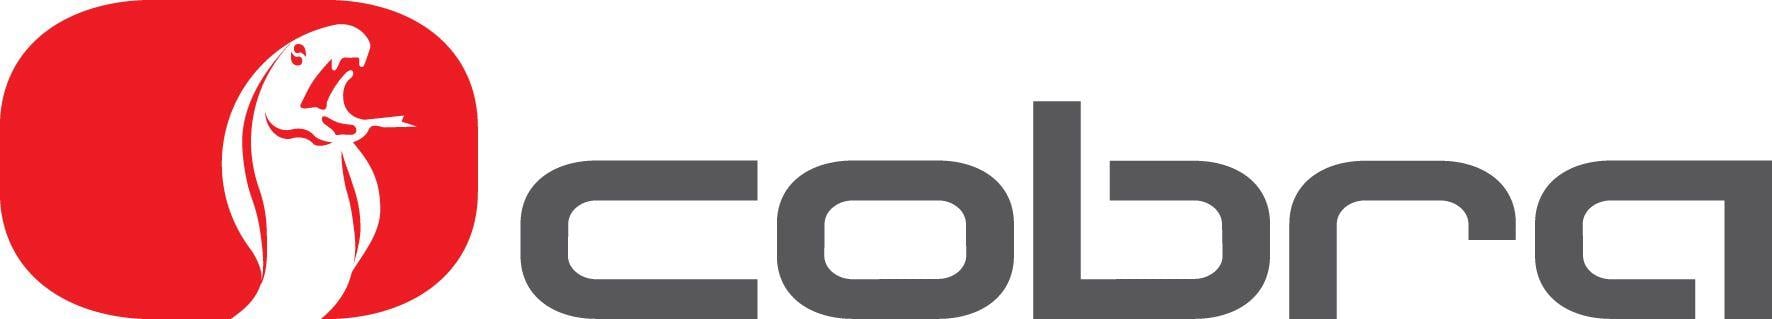 Cobra Insurance Logo - Cobra Trackers Now Avaliable | Tony Gilham Limited - Servicing ...